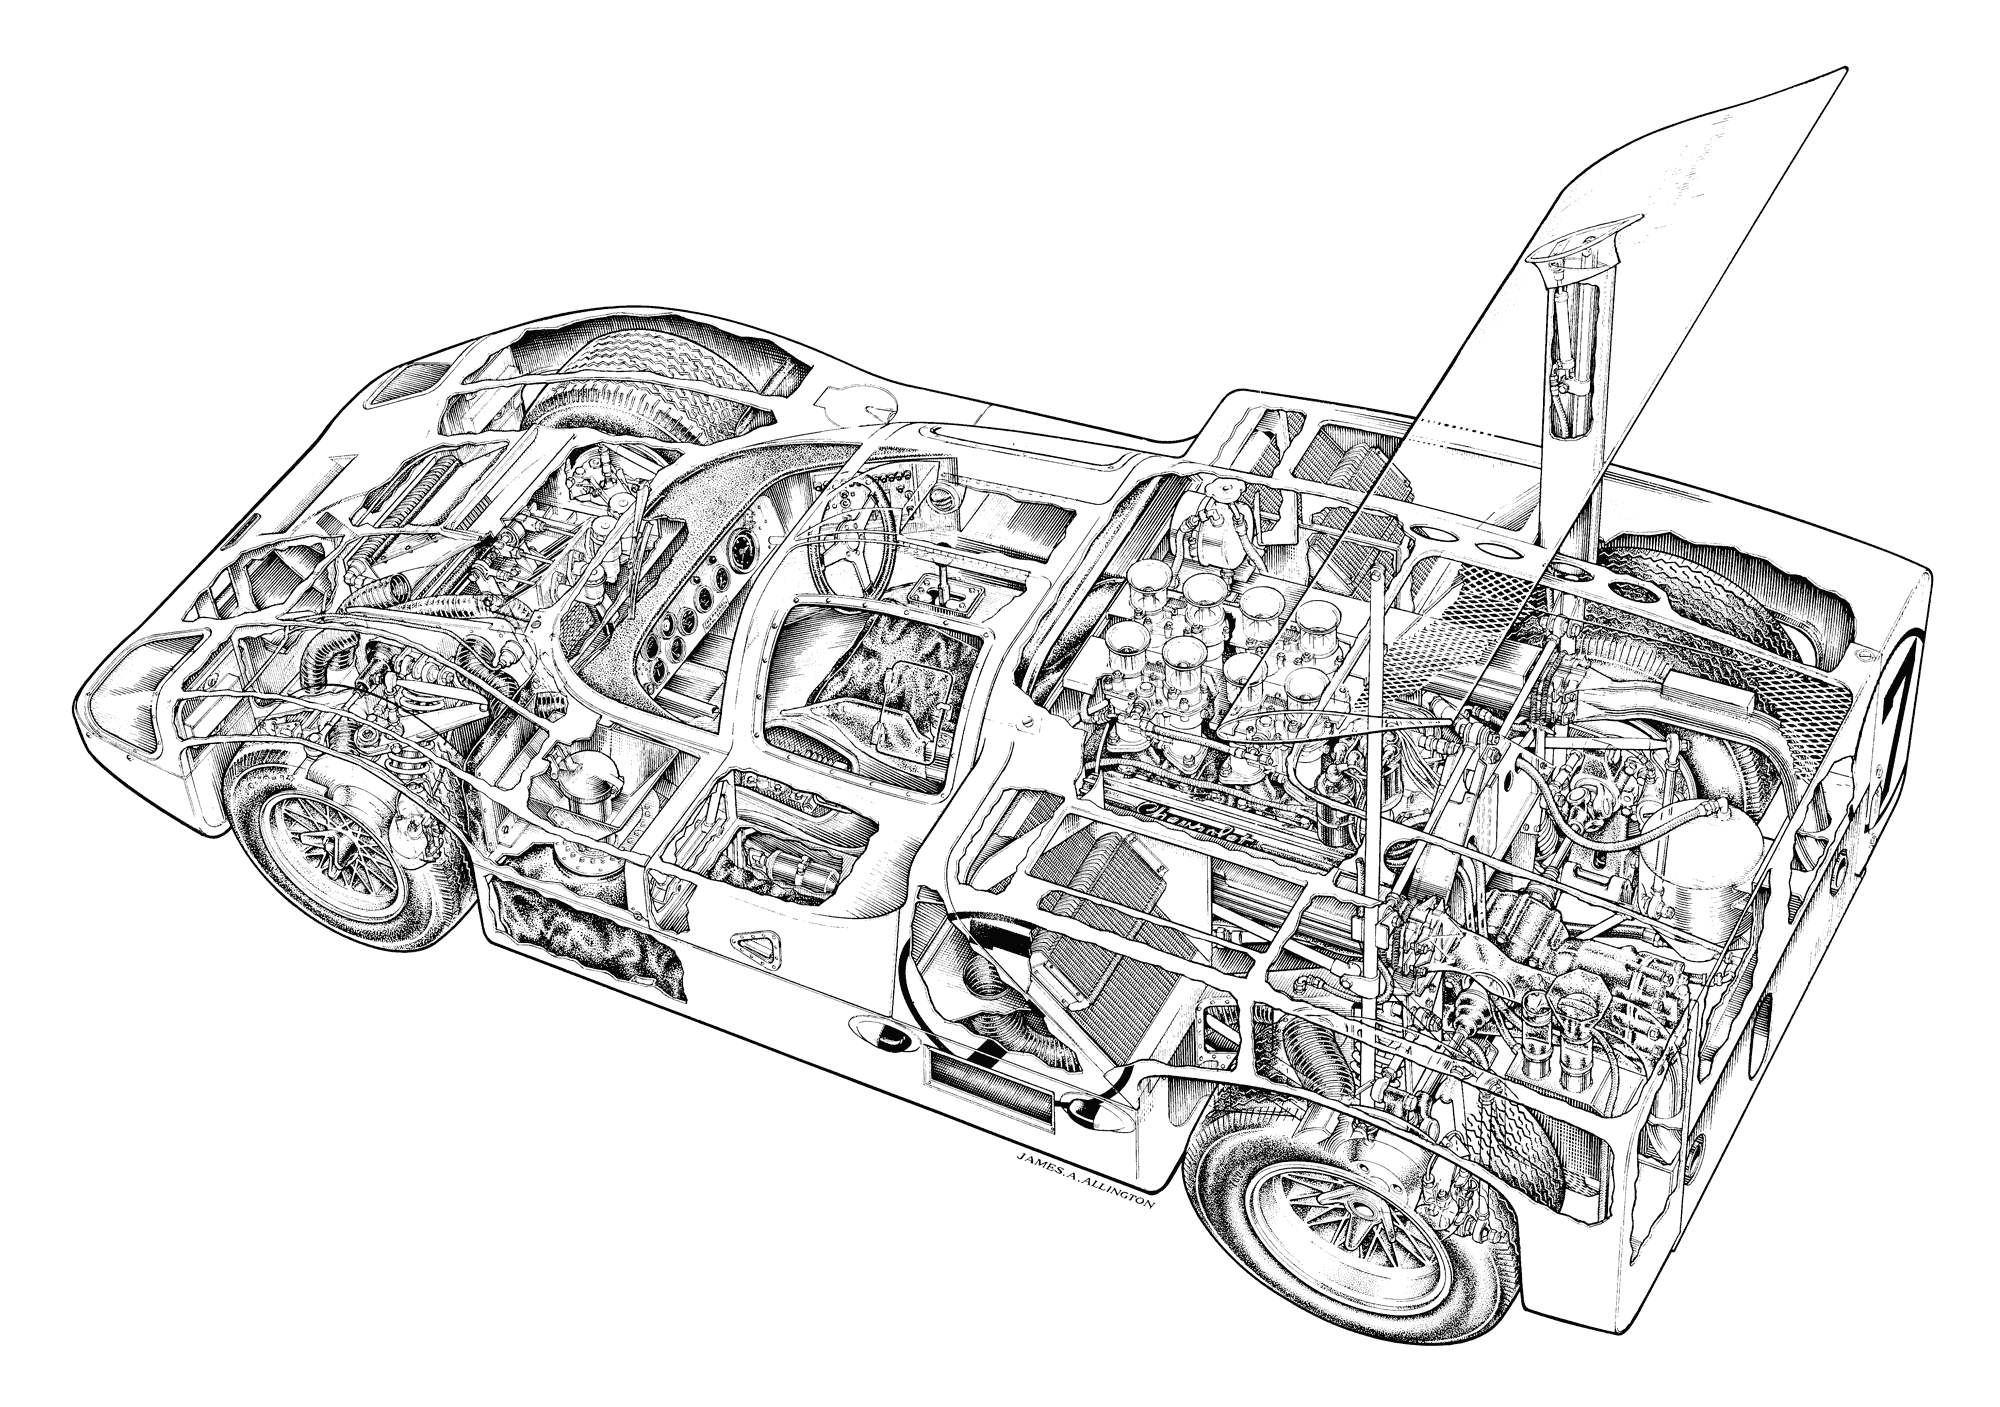 Chaparral 2F cutaway